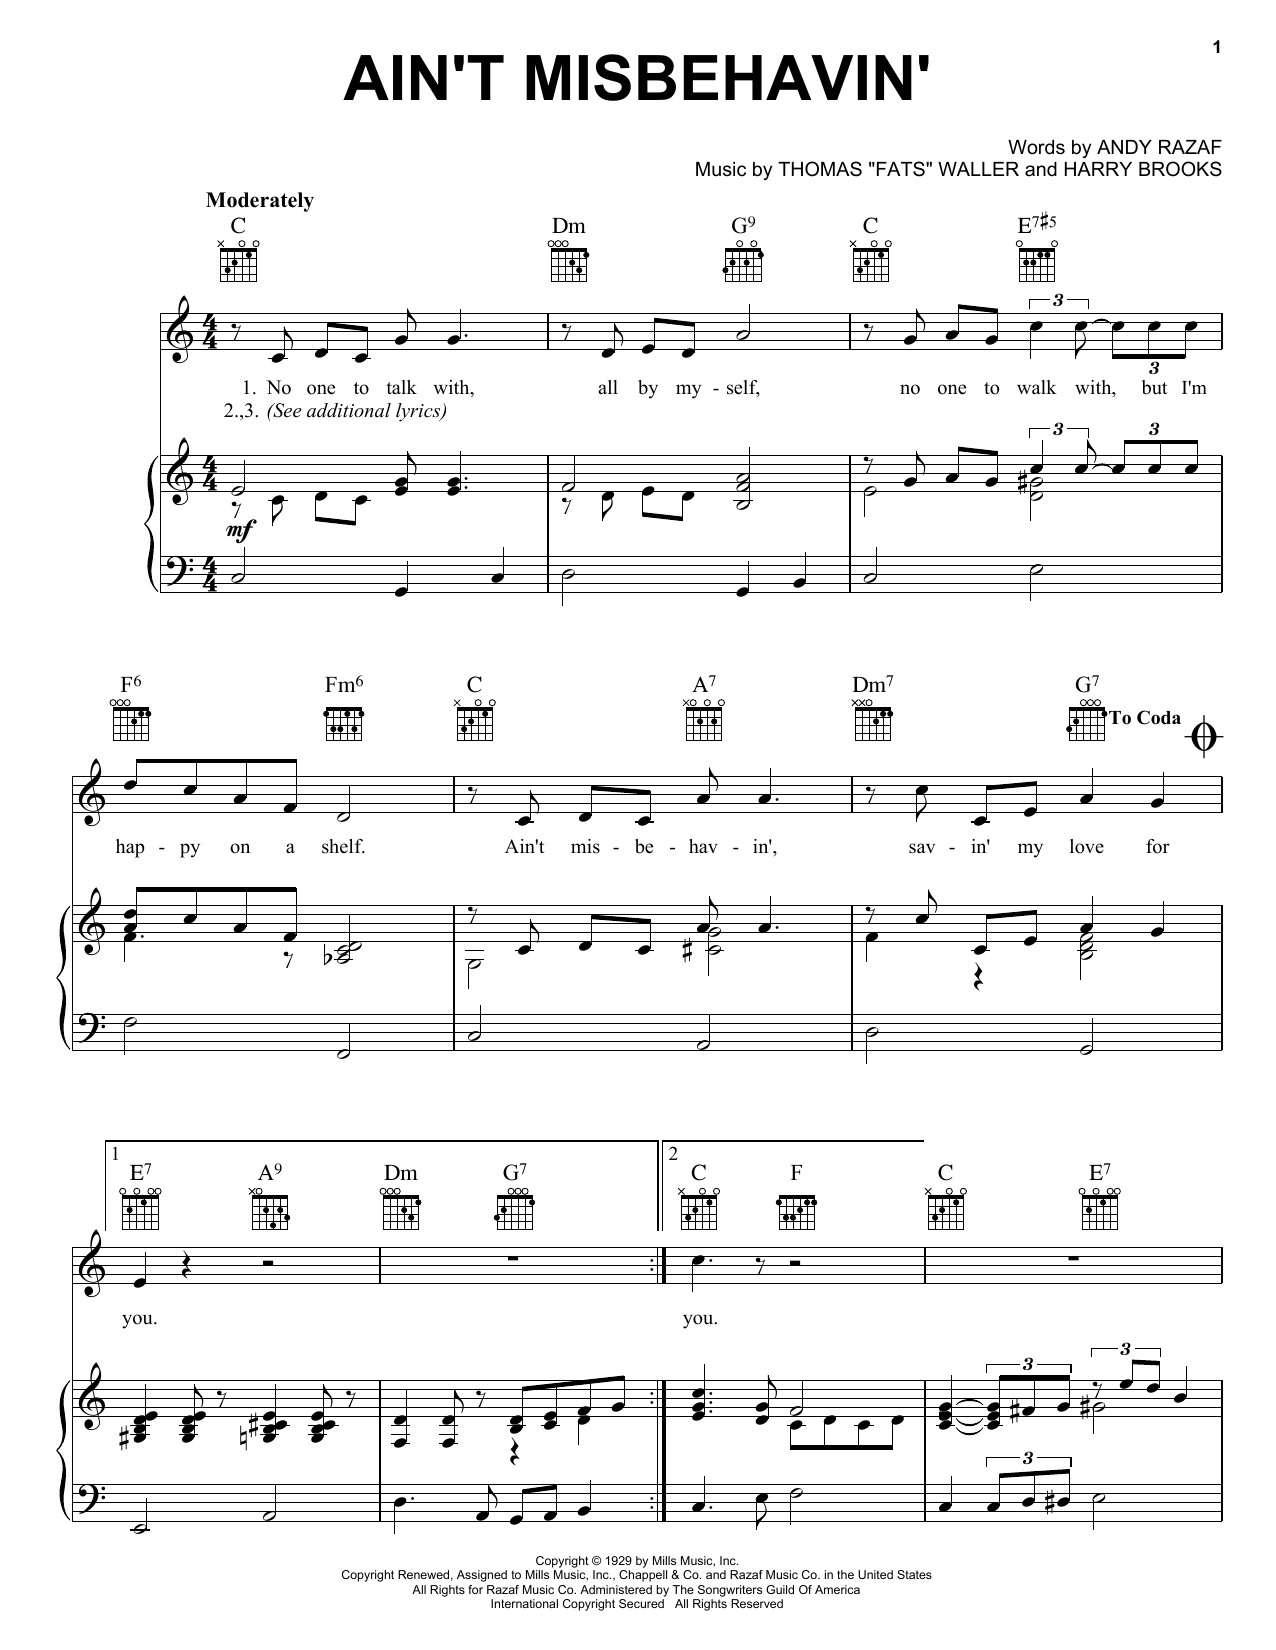 Fats Waller Ain't Misbehavin' sheet music notes printable PDF score